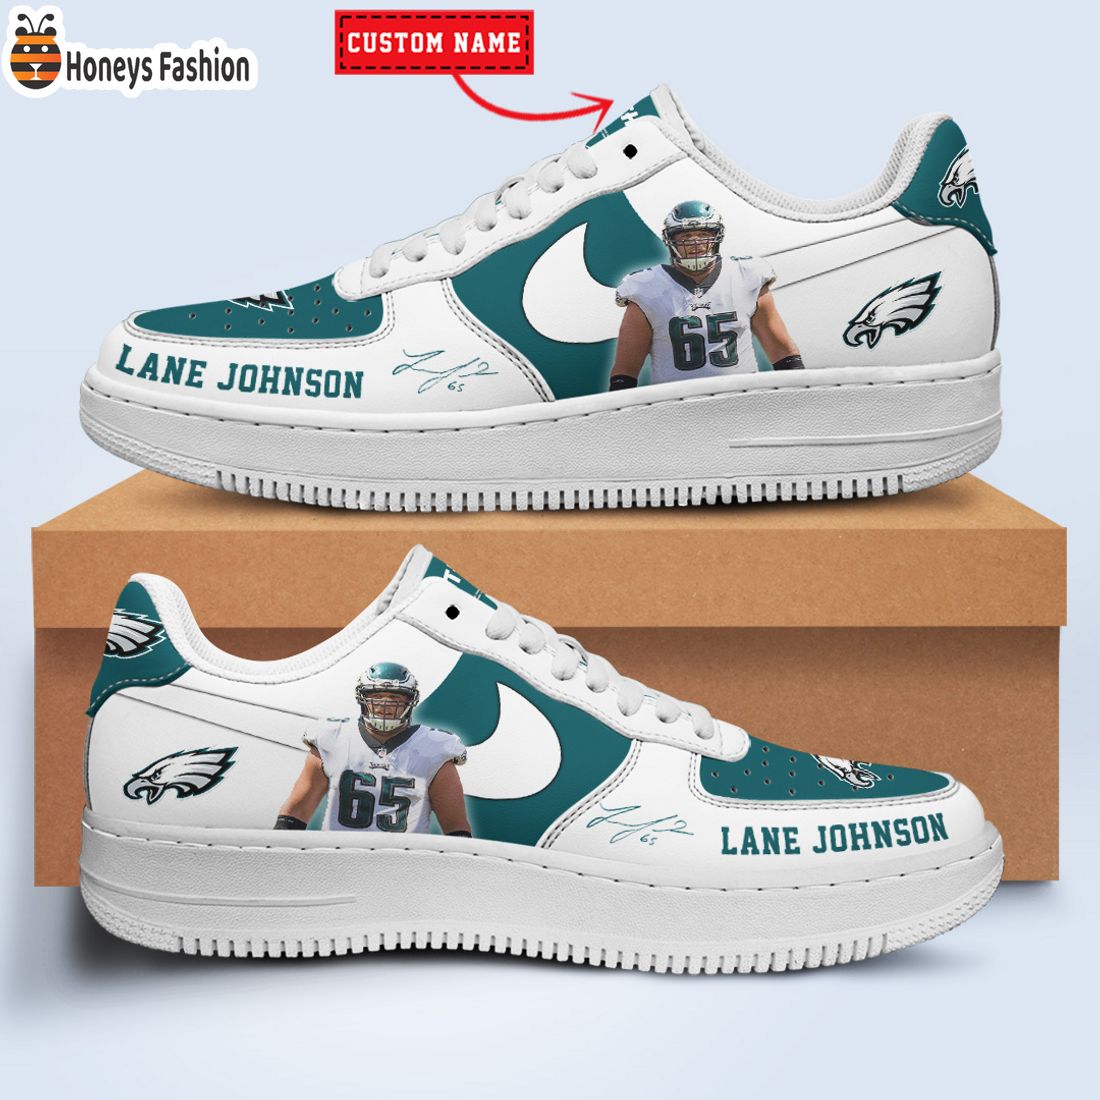 TOP SELLER Lane Johnson Philadelphia Eagles NFL Custom Name Nike Air Force Shoes